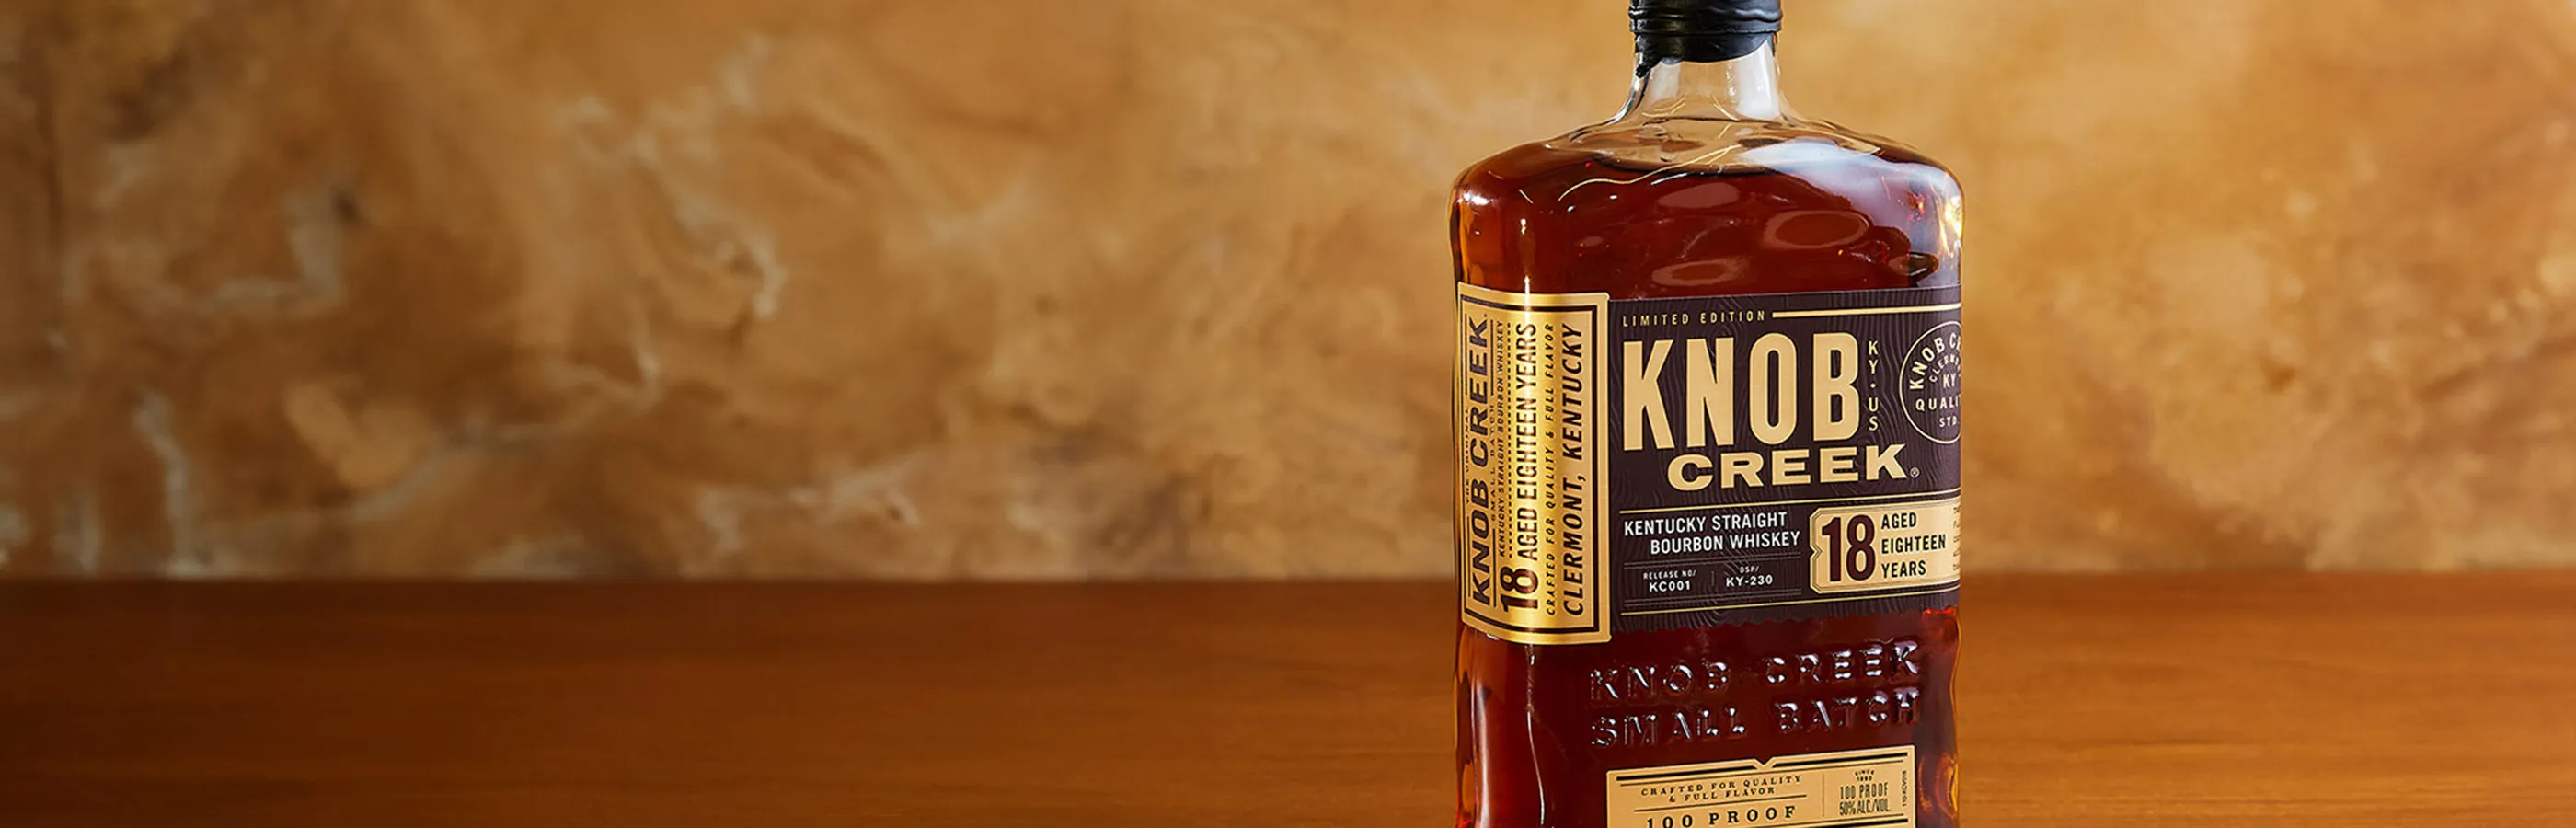 Knob Creek® Bourbon Introduces Limited-Edition 18 Year Old Bourbon